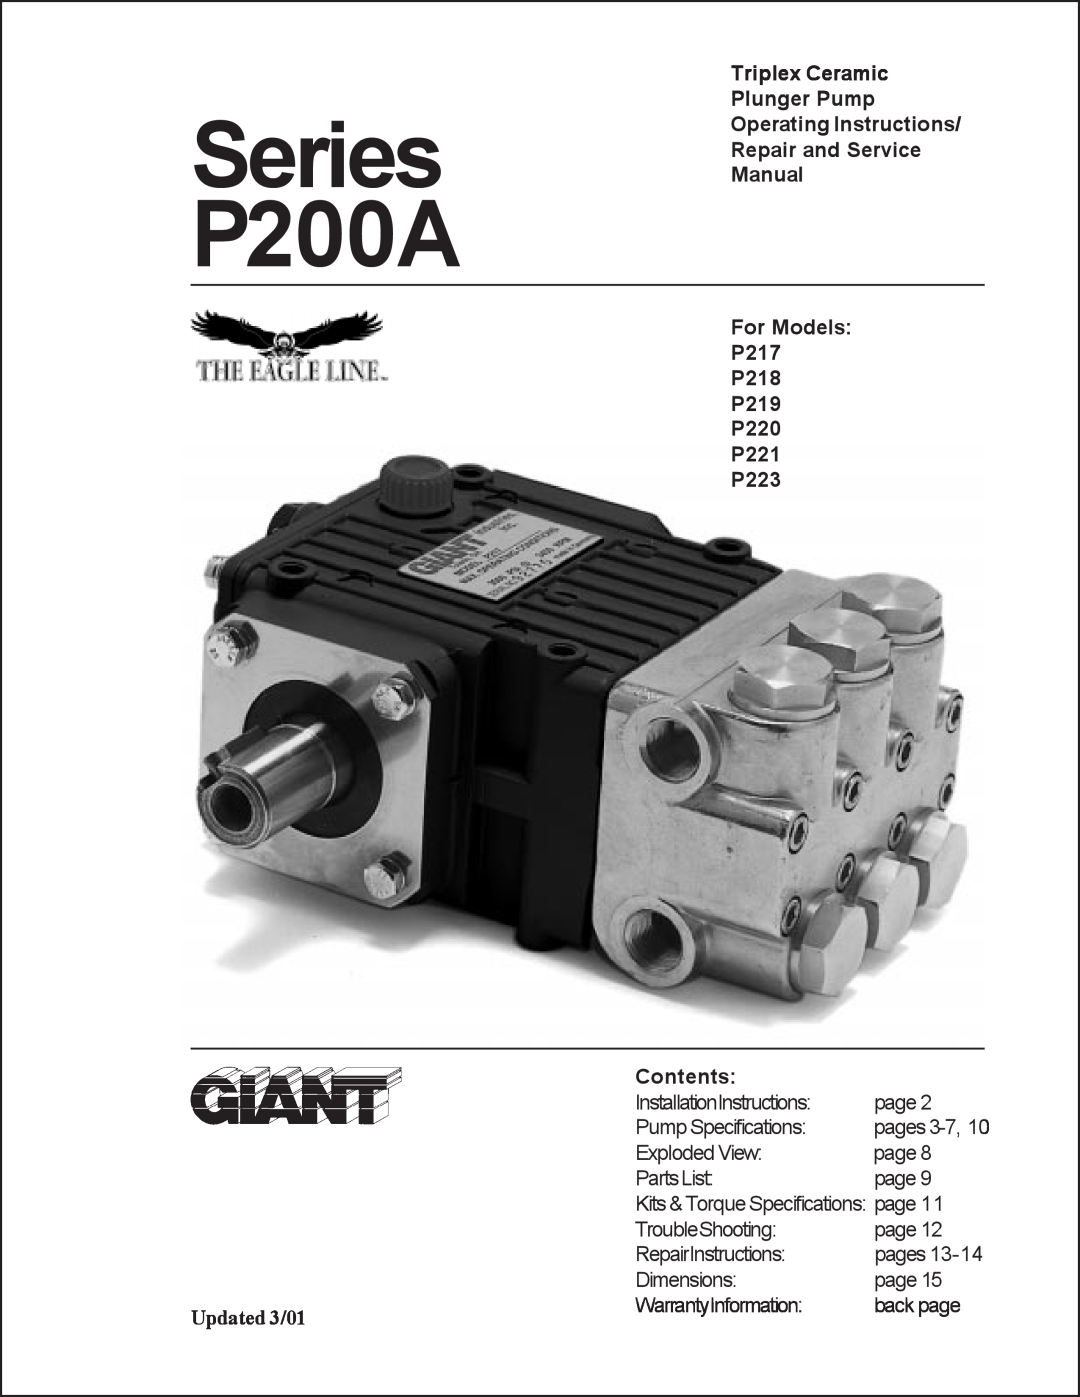 Giant P200A operating instructions Triplex Ceramic Plunger Pump, For Models P217 P218 P219 P220 P221 P223, Contents 